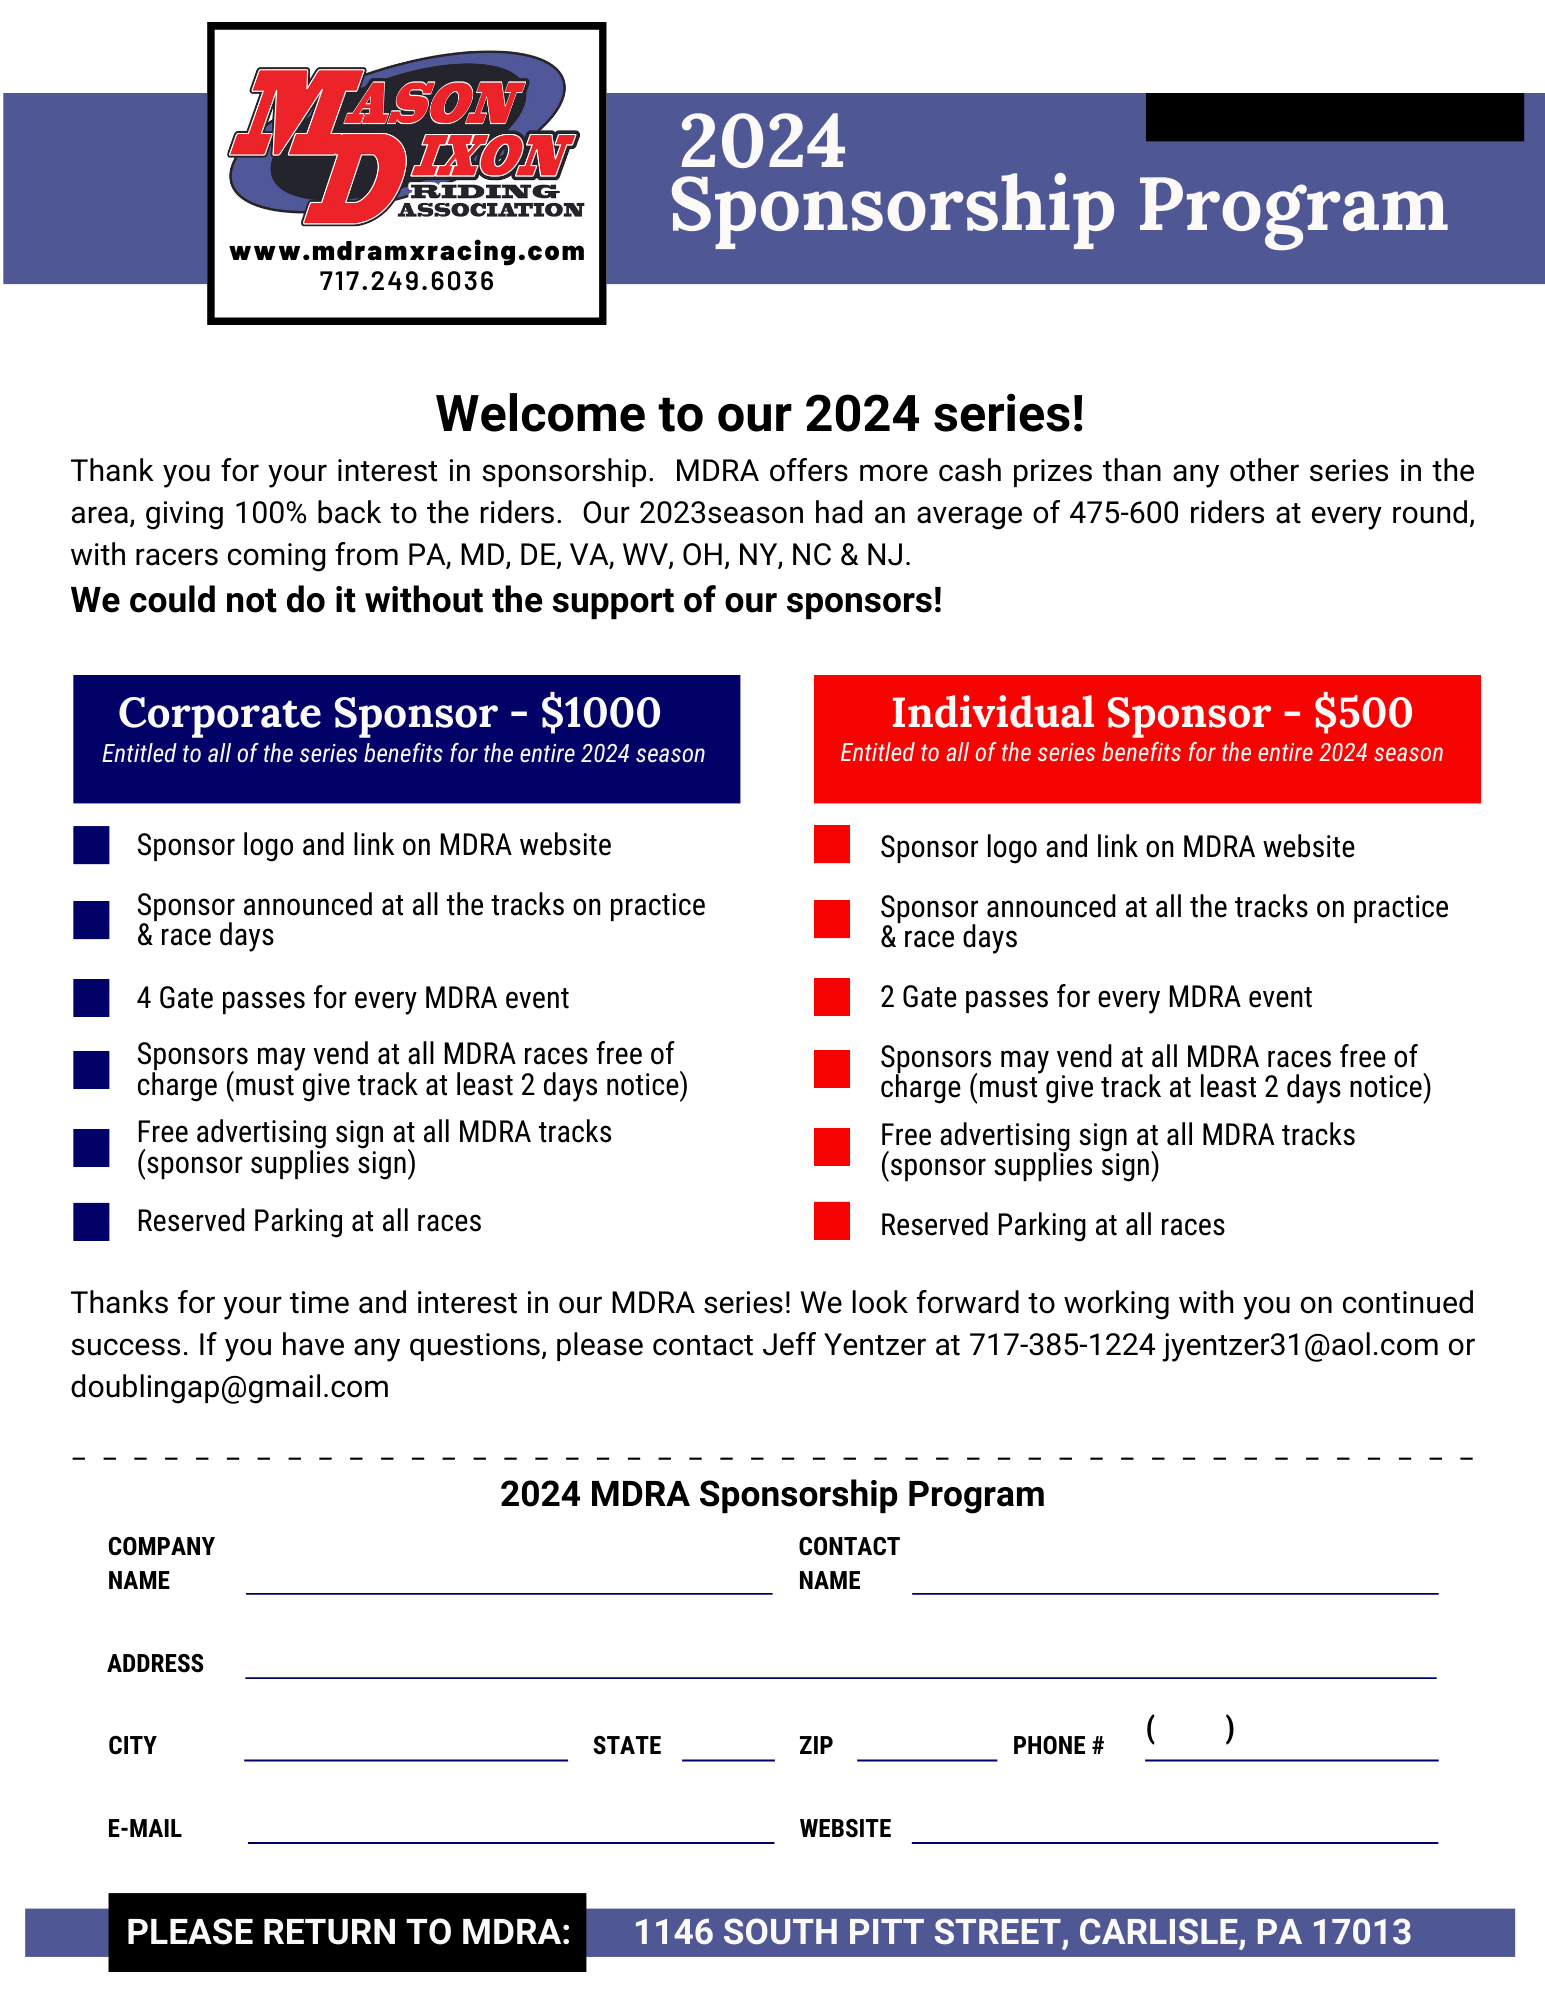 2023 Sponsorship Program